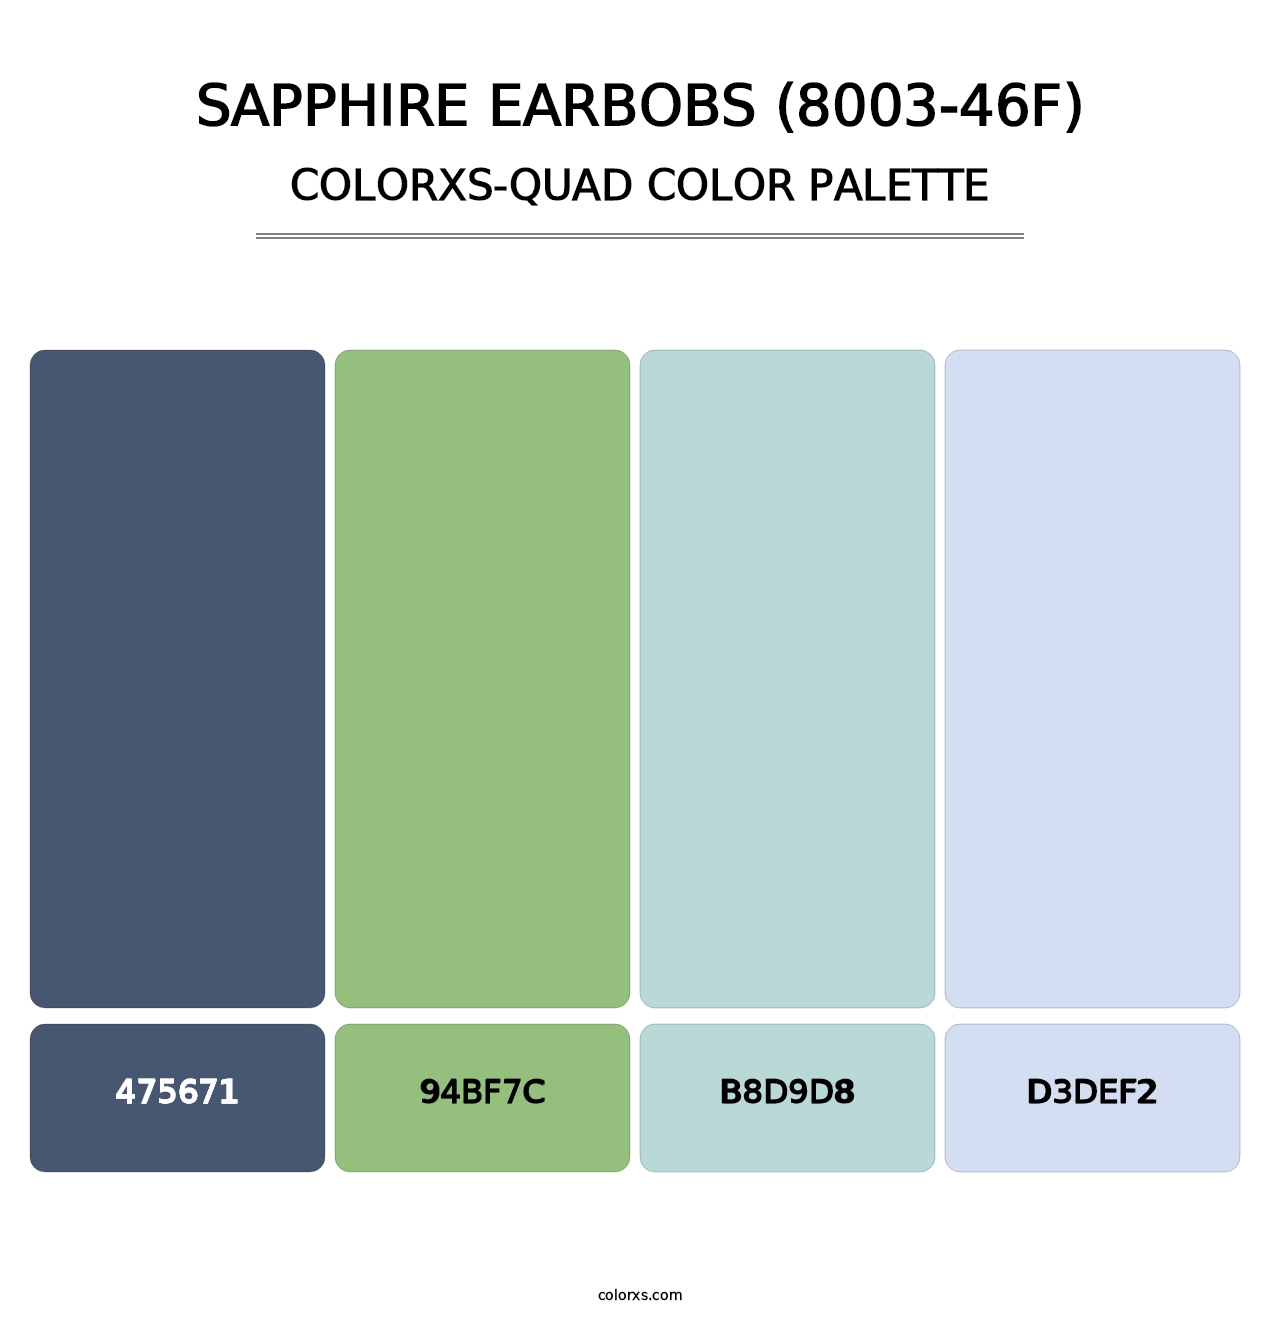 Sapphire Earbobs (8003-46F) - Colorxs Quad Palette